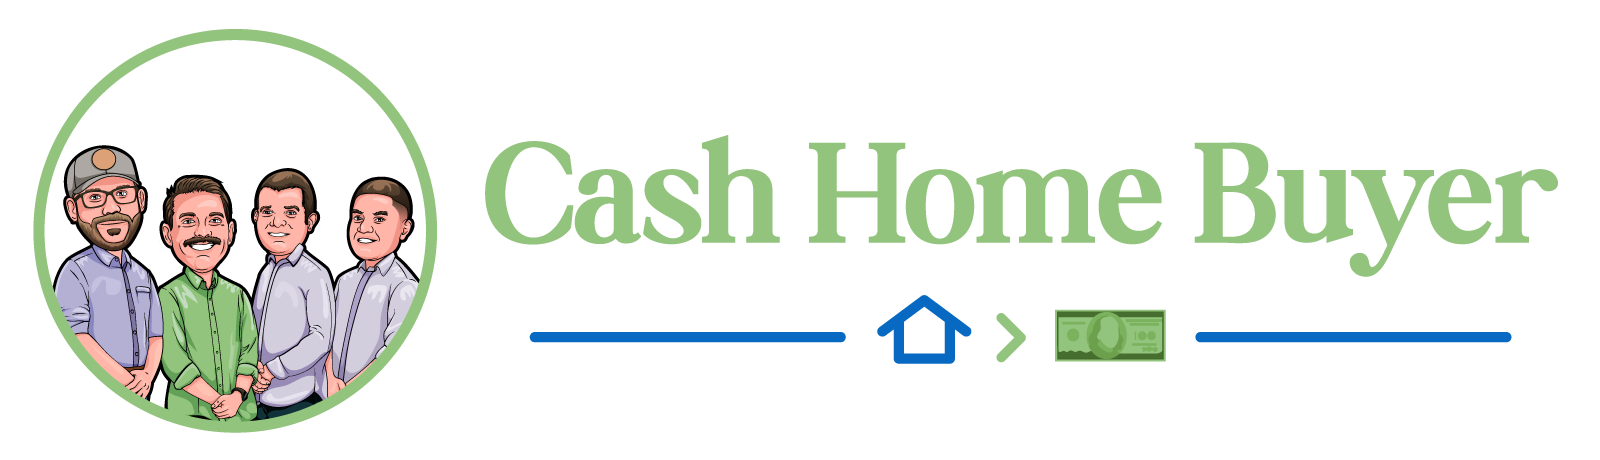 A Cash Home Buyer logo